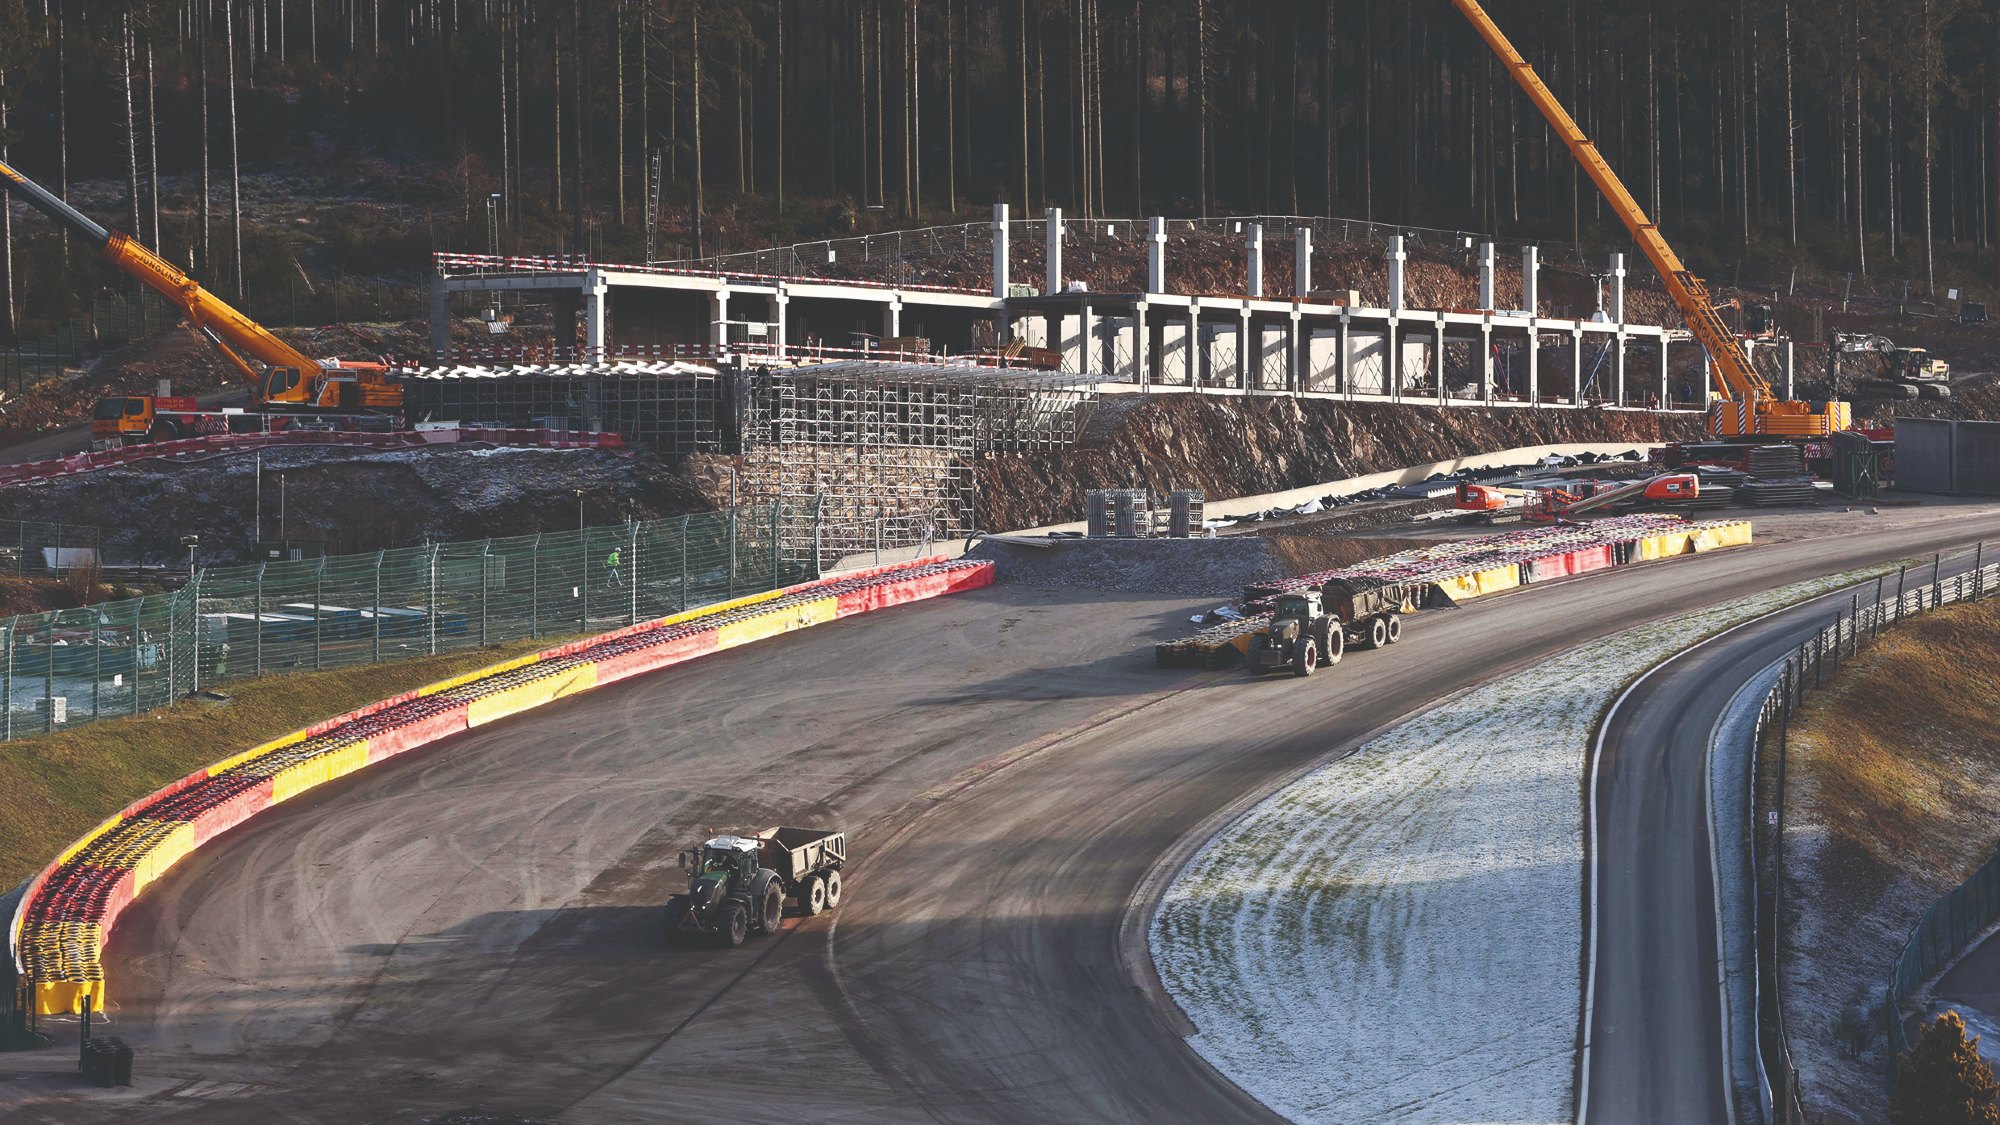 Spa Francorchamps redevelopment 2022